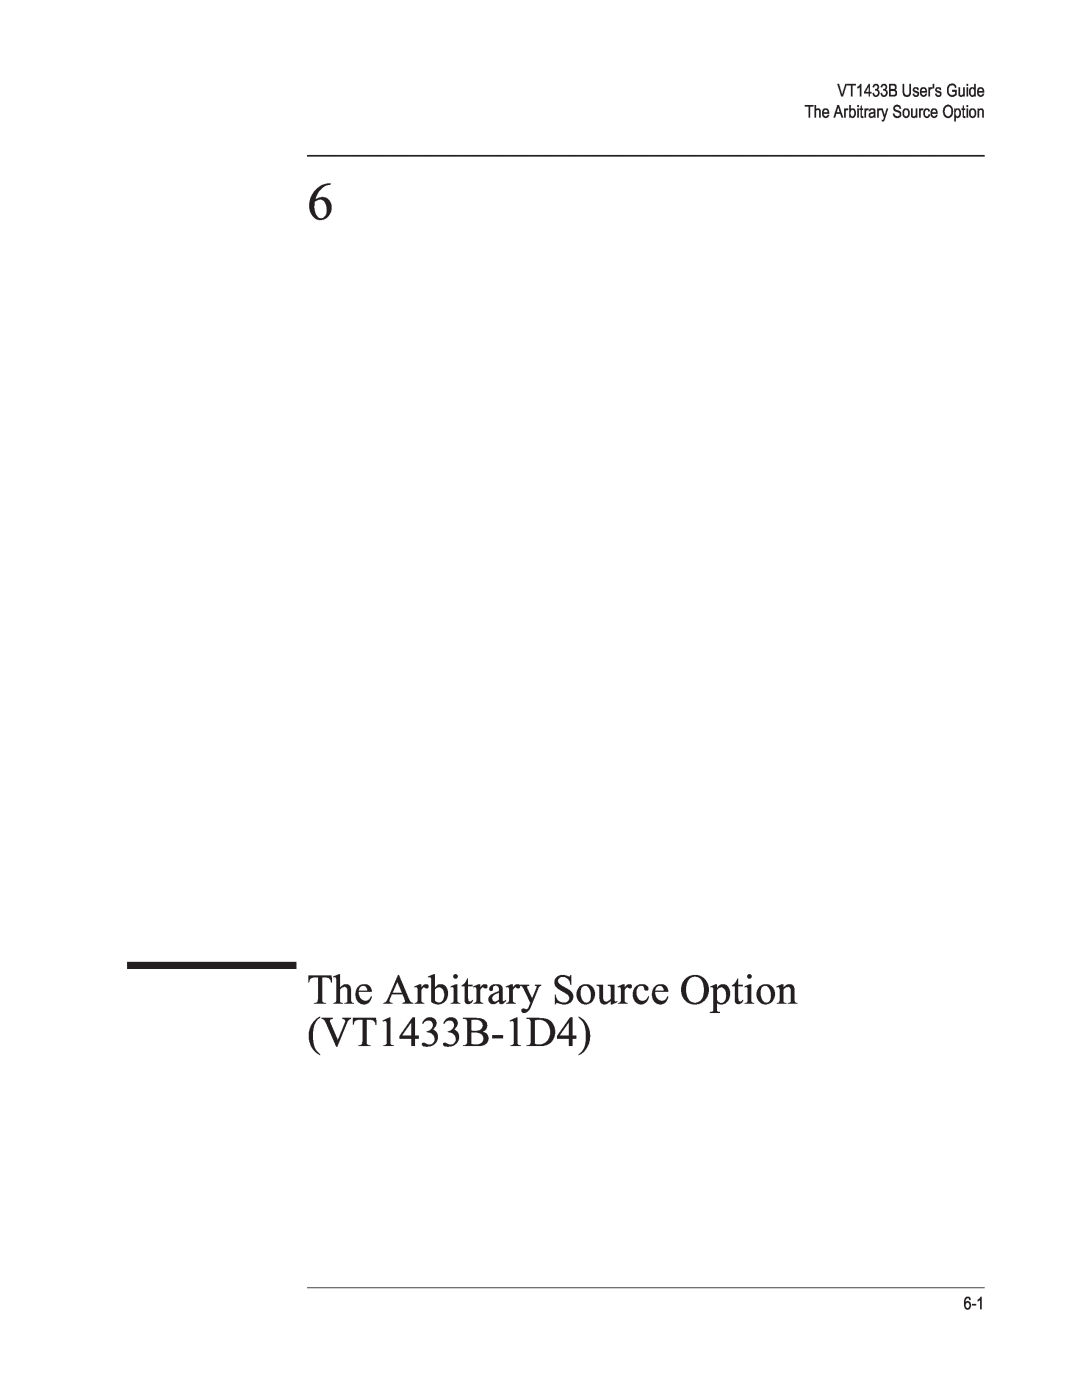 VXI manual The Arbitrary Source Option VT1433B-1D4, VT1433B Users Guide The Arbitrary Source Option 